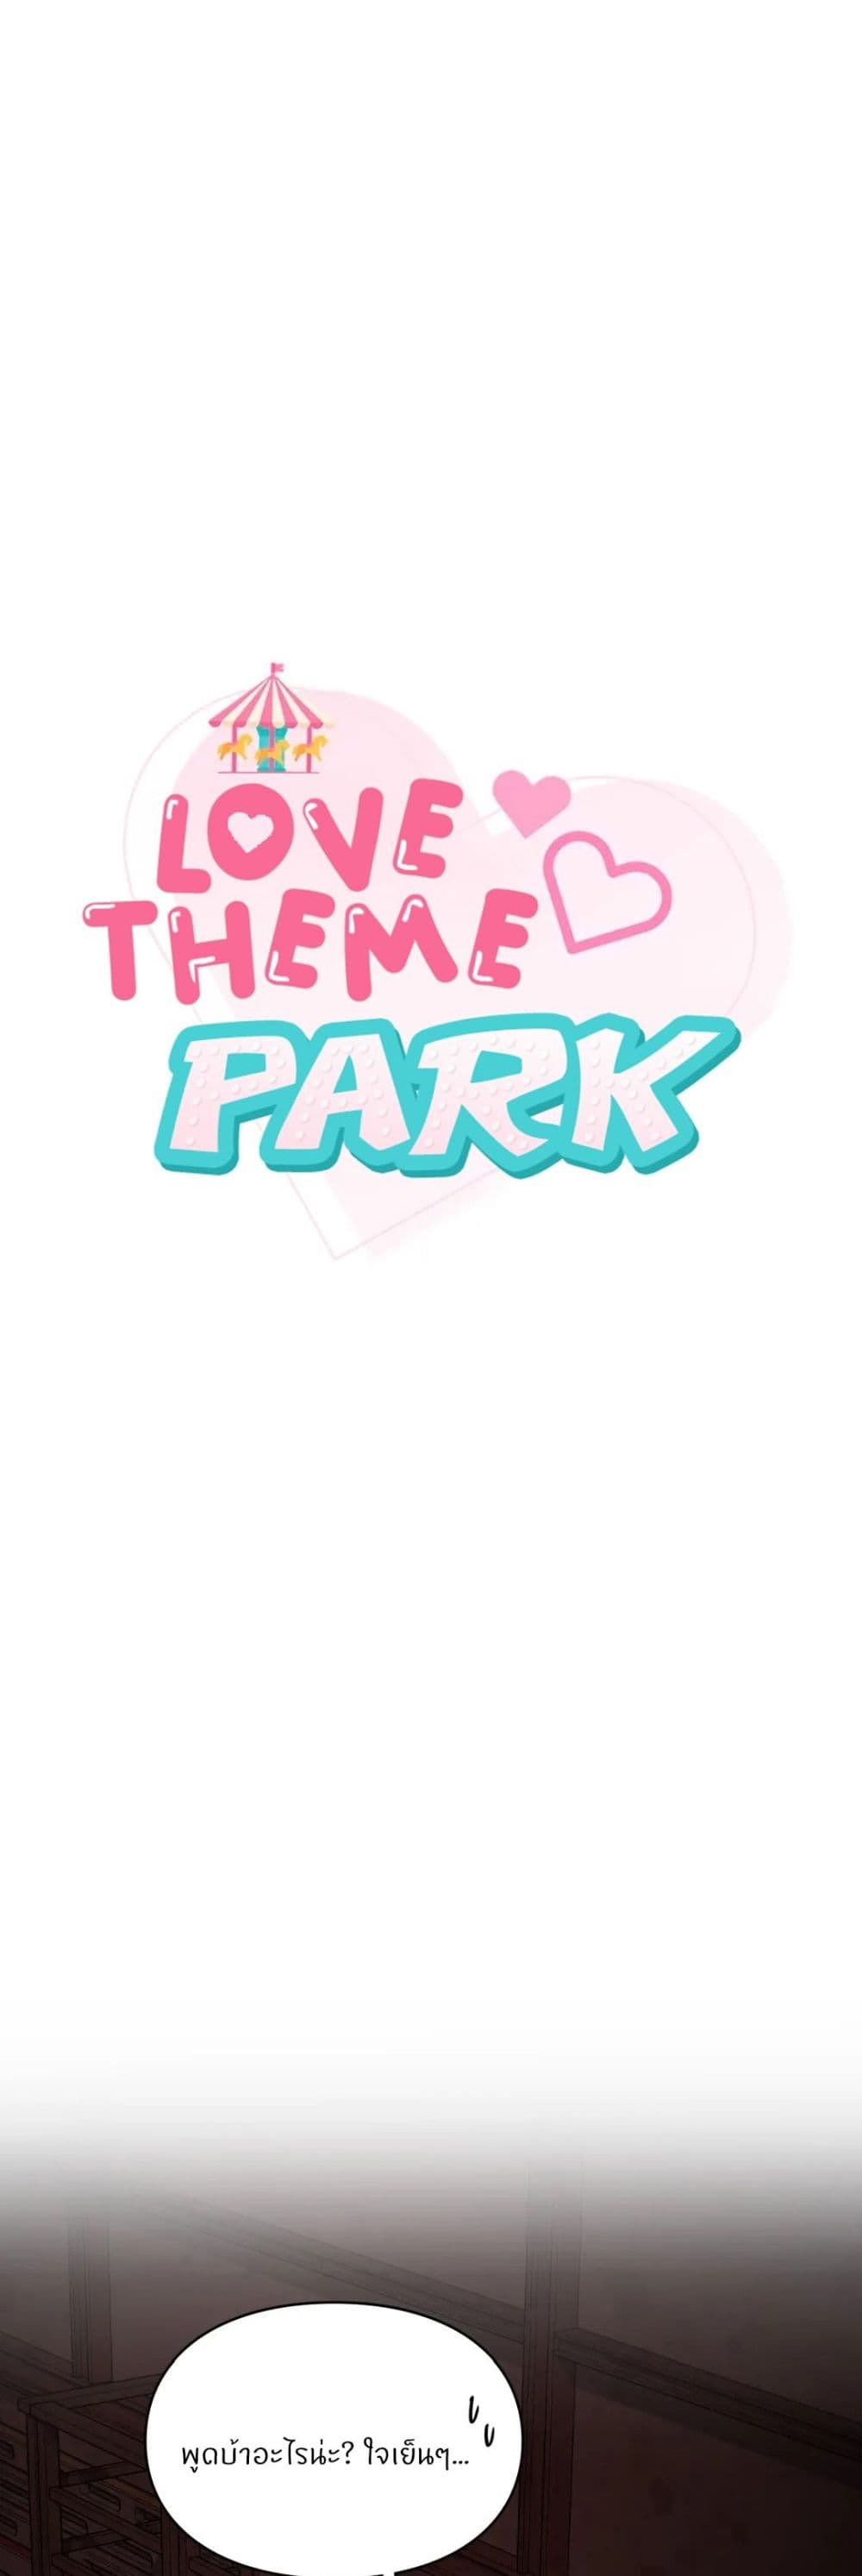 Love Theme Park 31 (1)